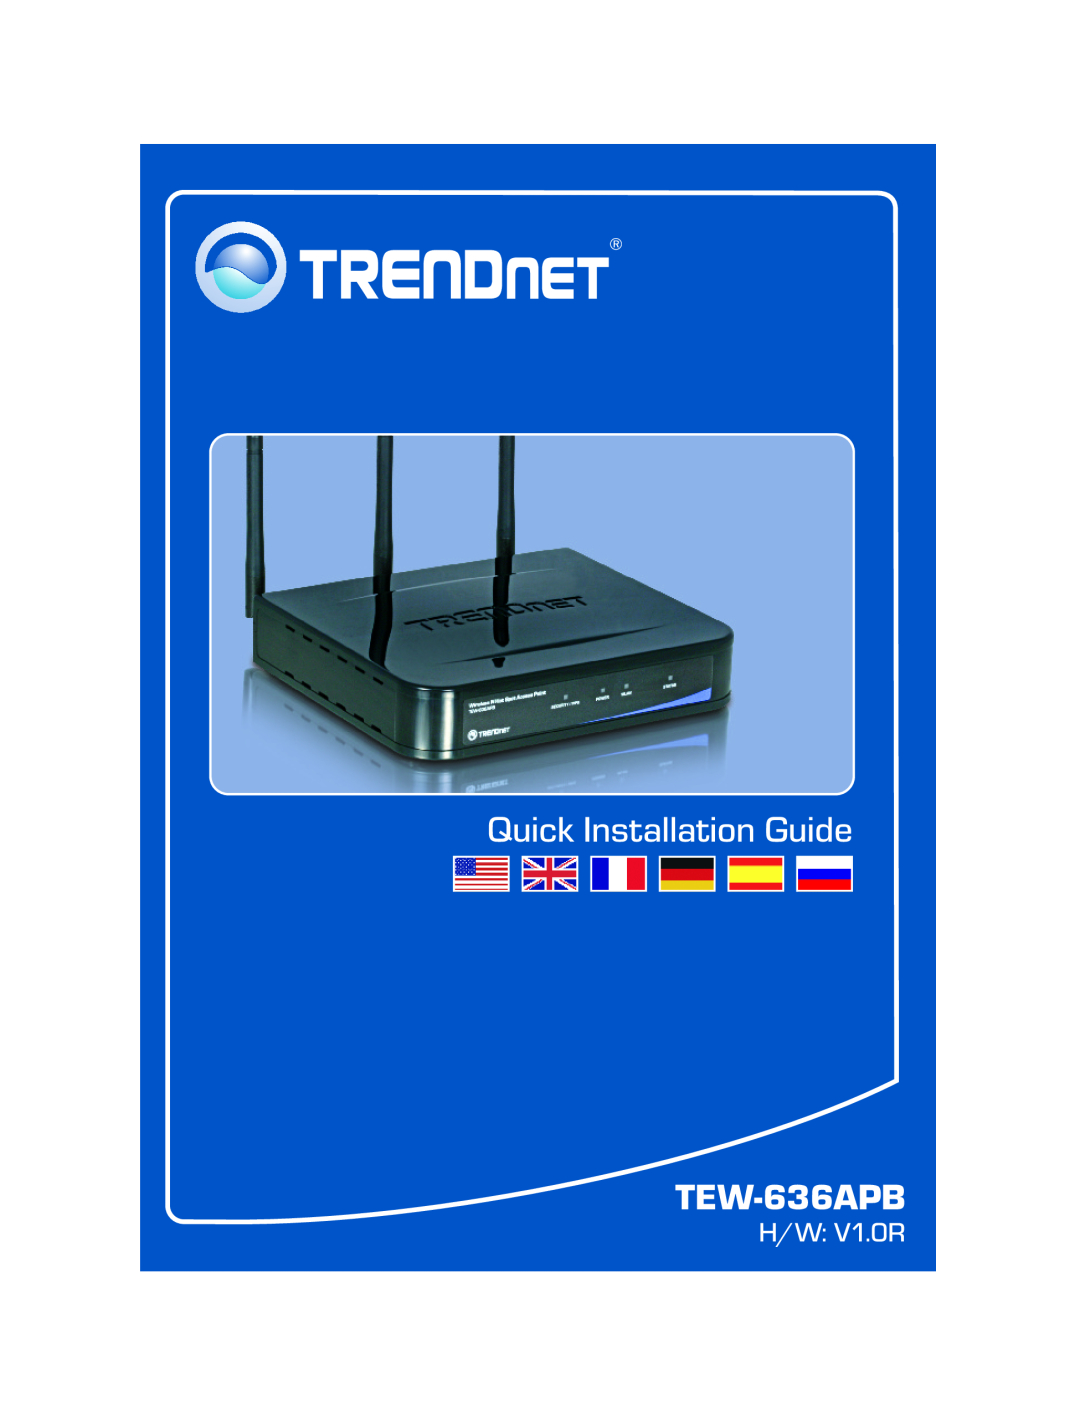 TRENDnet TEW-636APB manual Quick Installation Guide, H/W V1.0R 